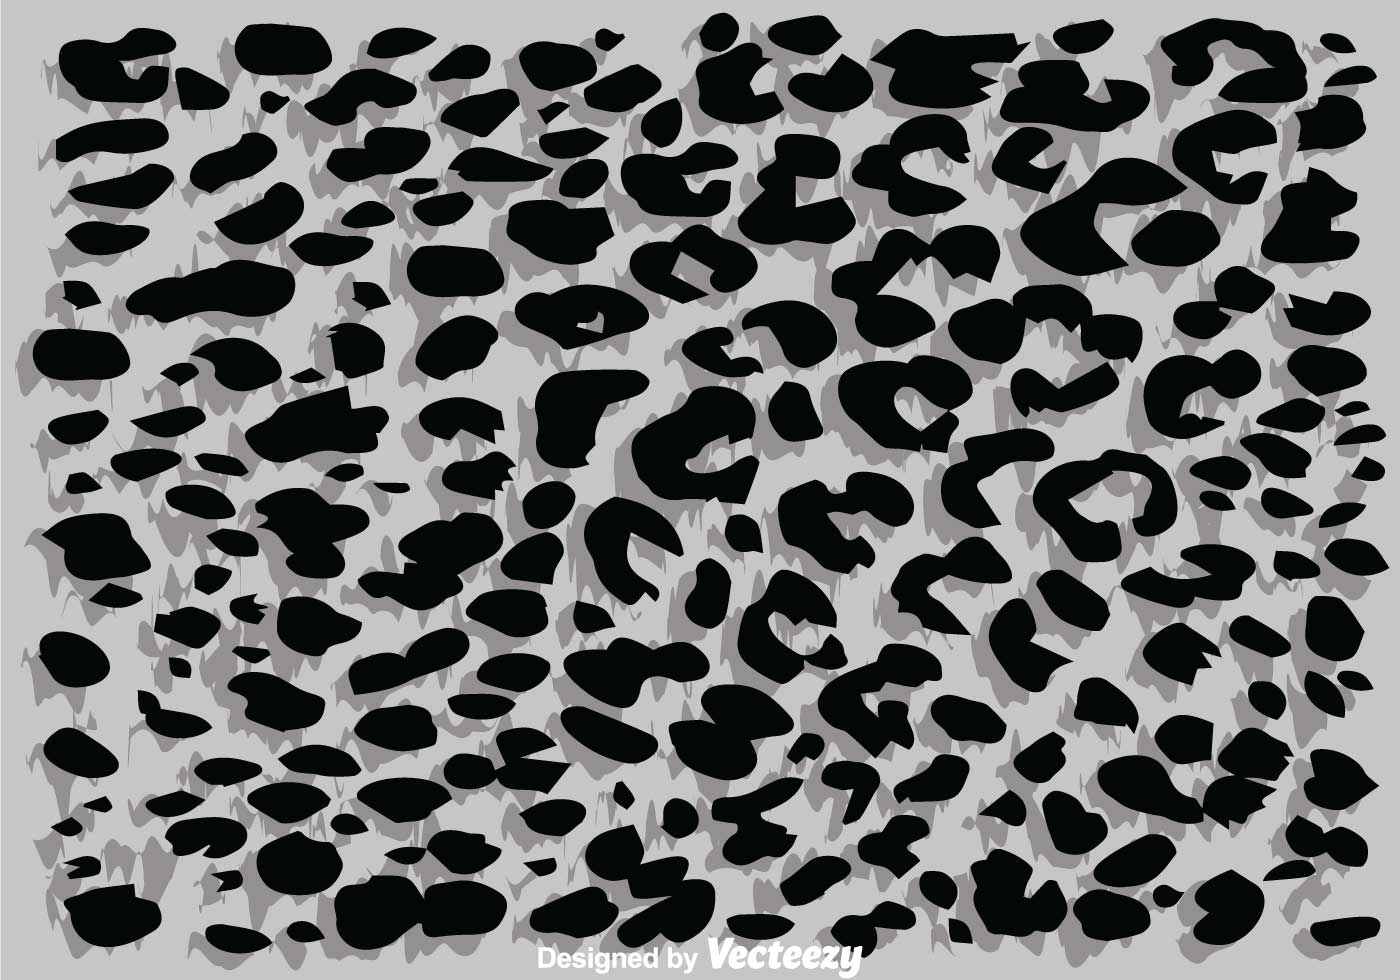 Download Abstract Leopard Skin Pattern 104022 - Download Free Vectors, Clipart Graphics & Vector Art